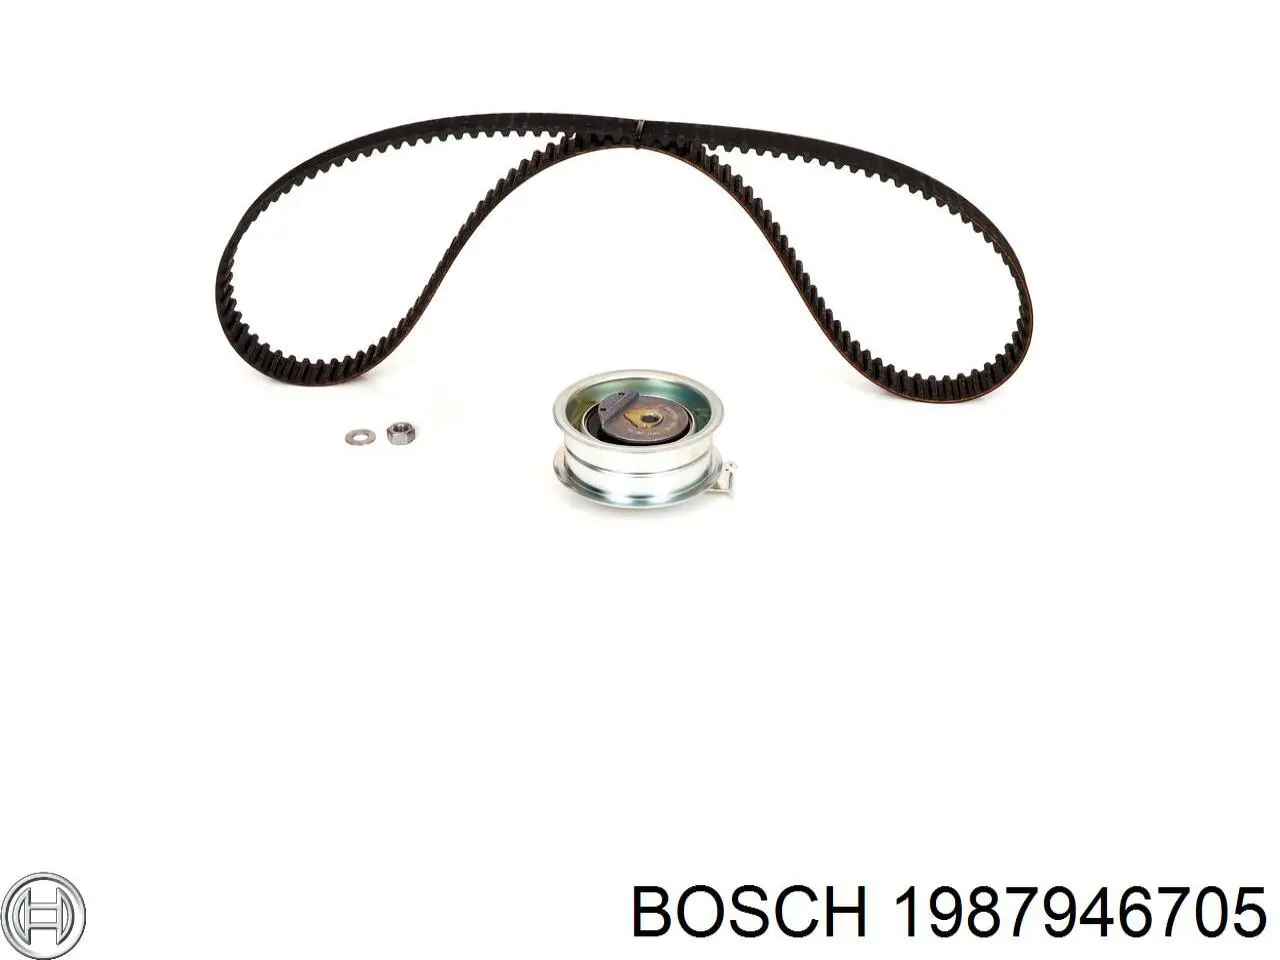 1987946705 Bosch комплект грм